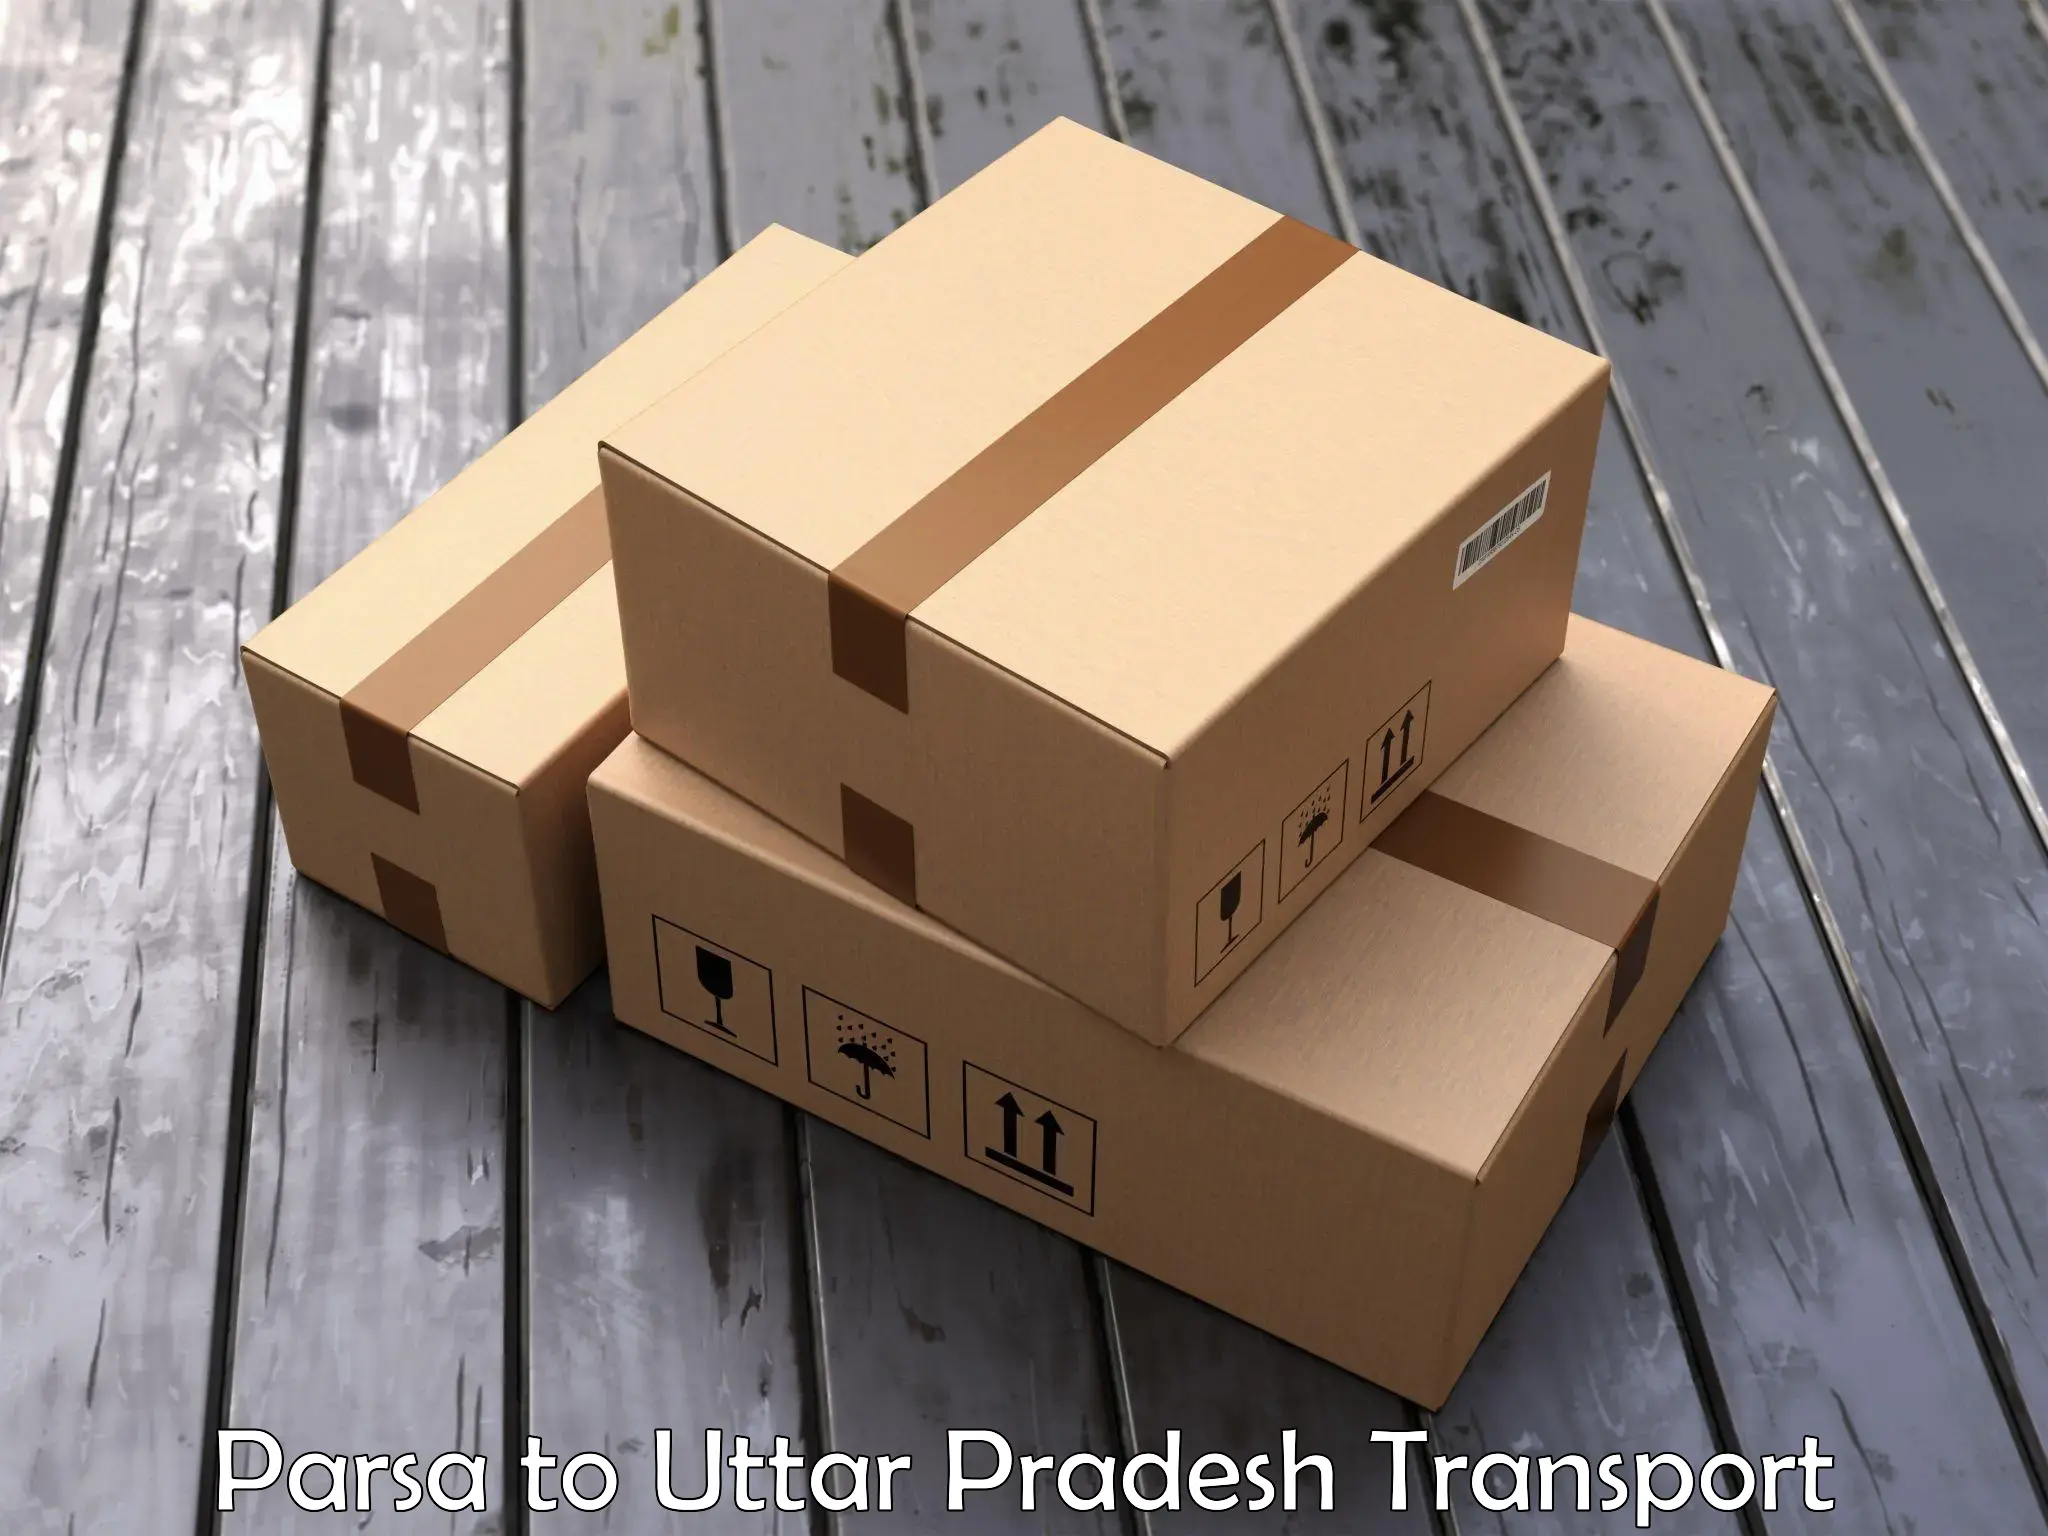 Delivery service Parsa to Vrindavan